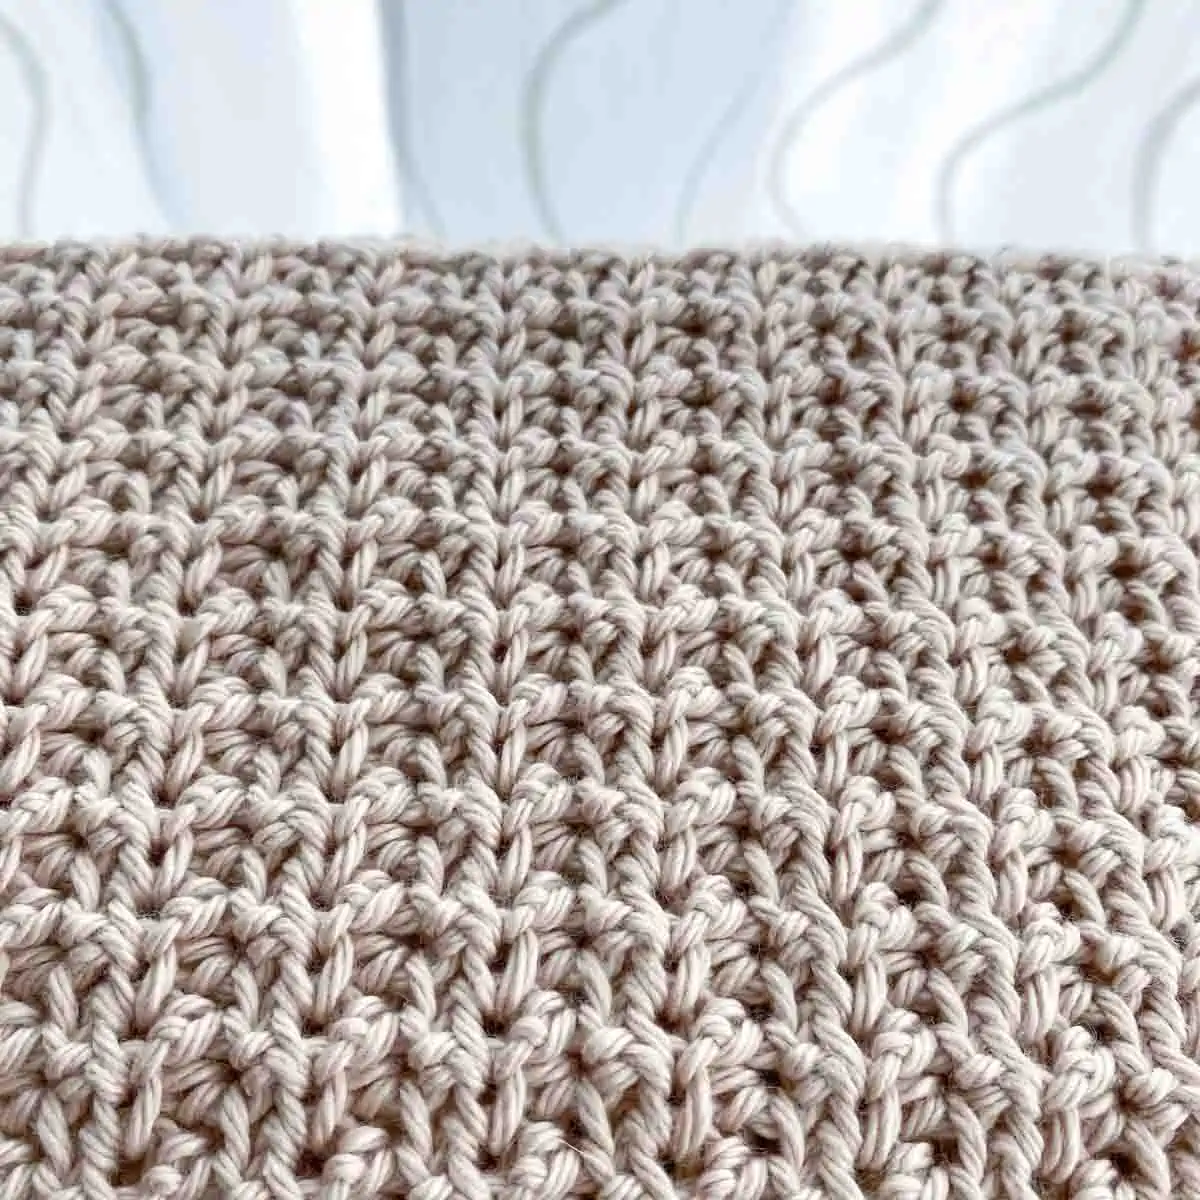 https://www.stitching-together.com/wp-content/uploads/2022/04/easy-crochet-hand-towel.webp